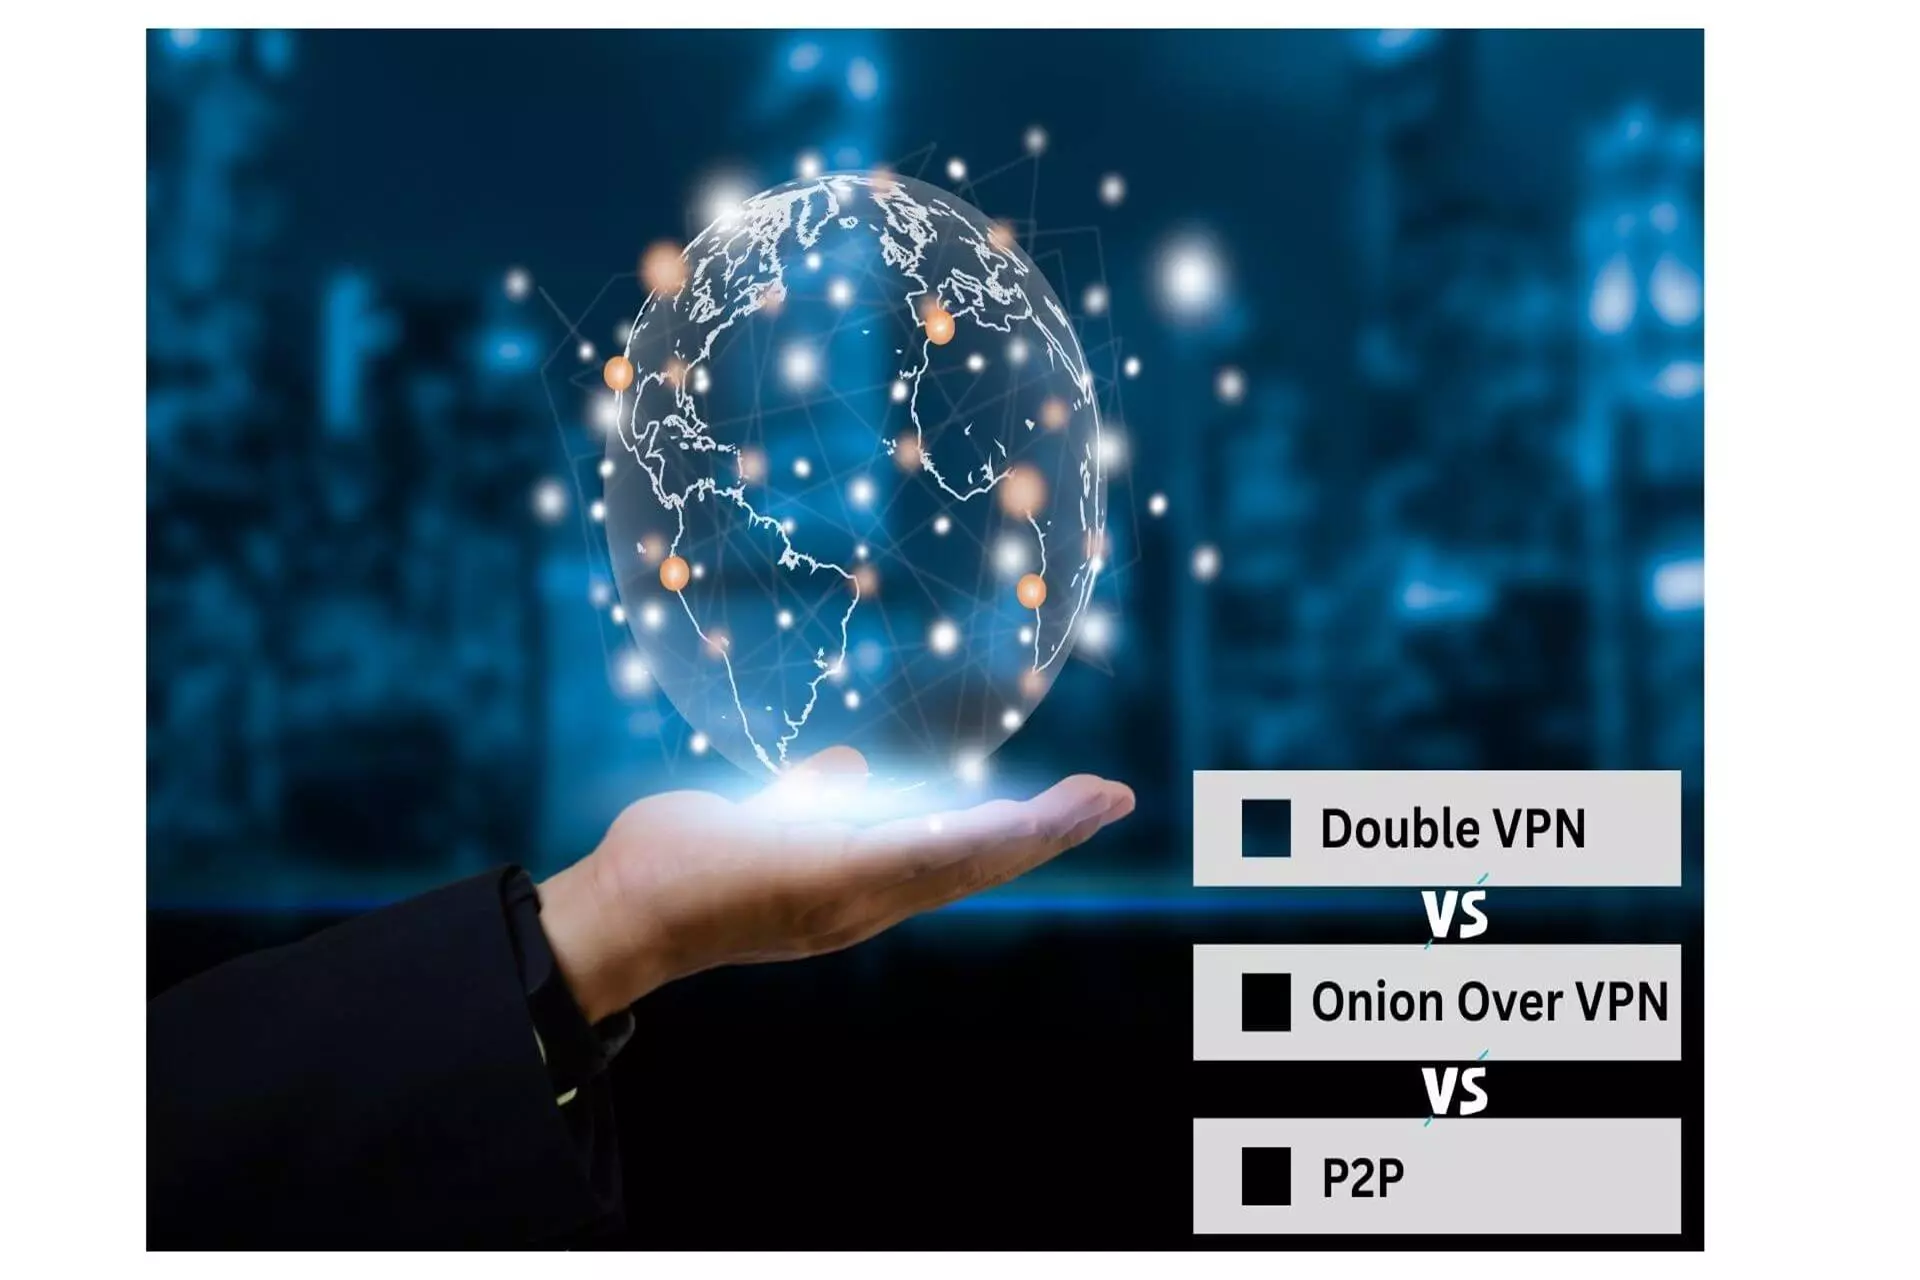 Double VPN vs Onion over VPN vs P2P